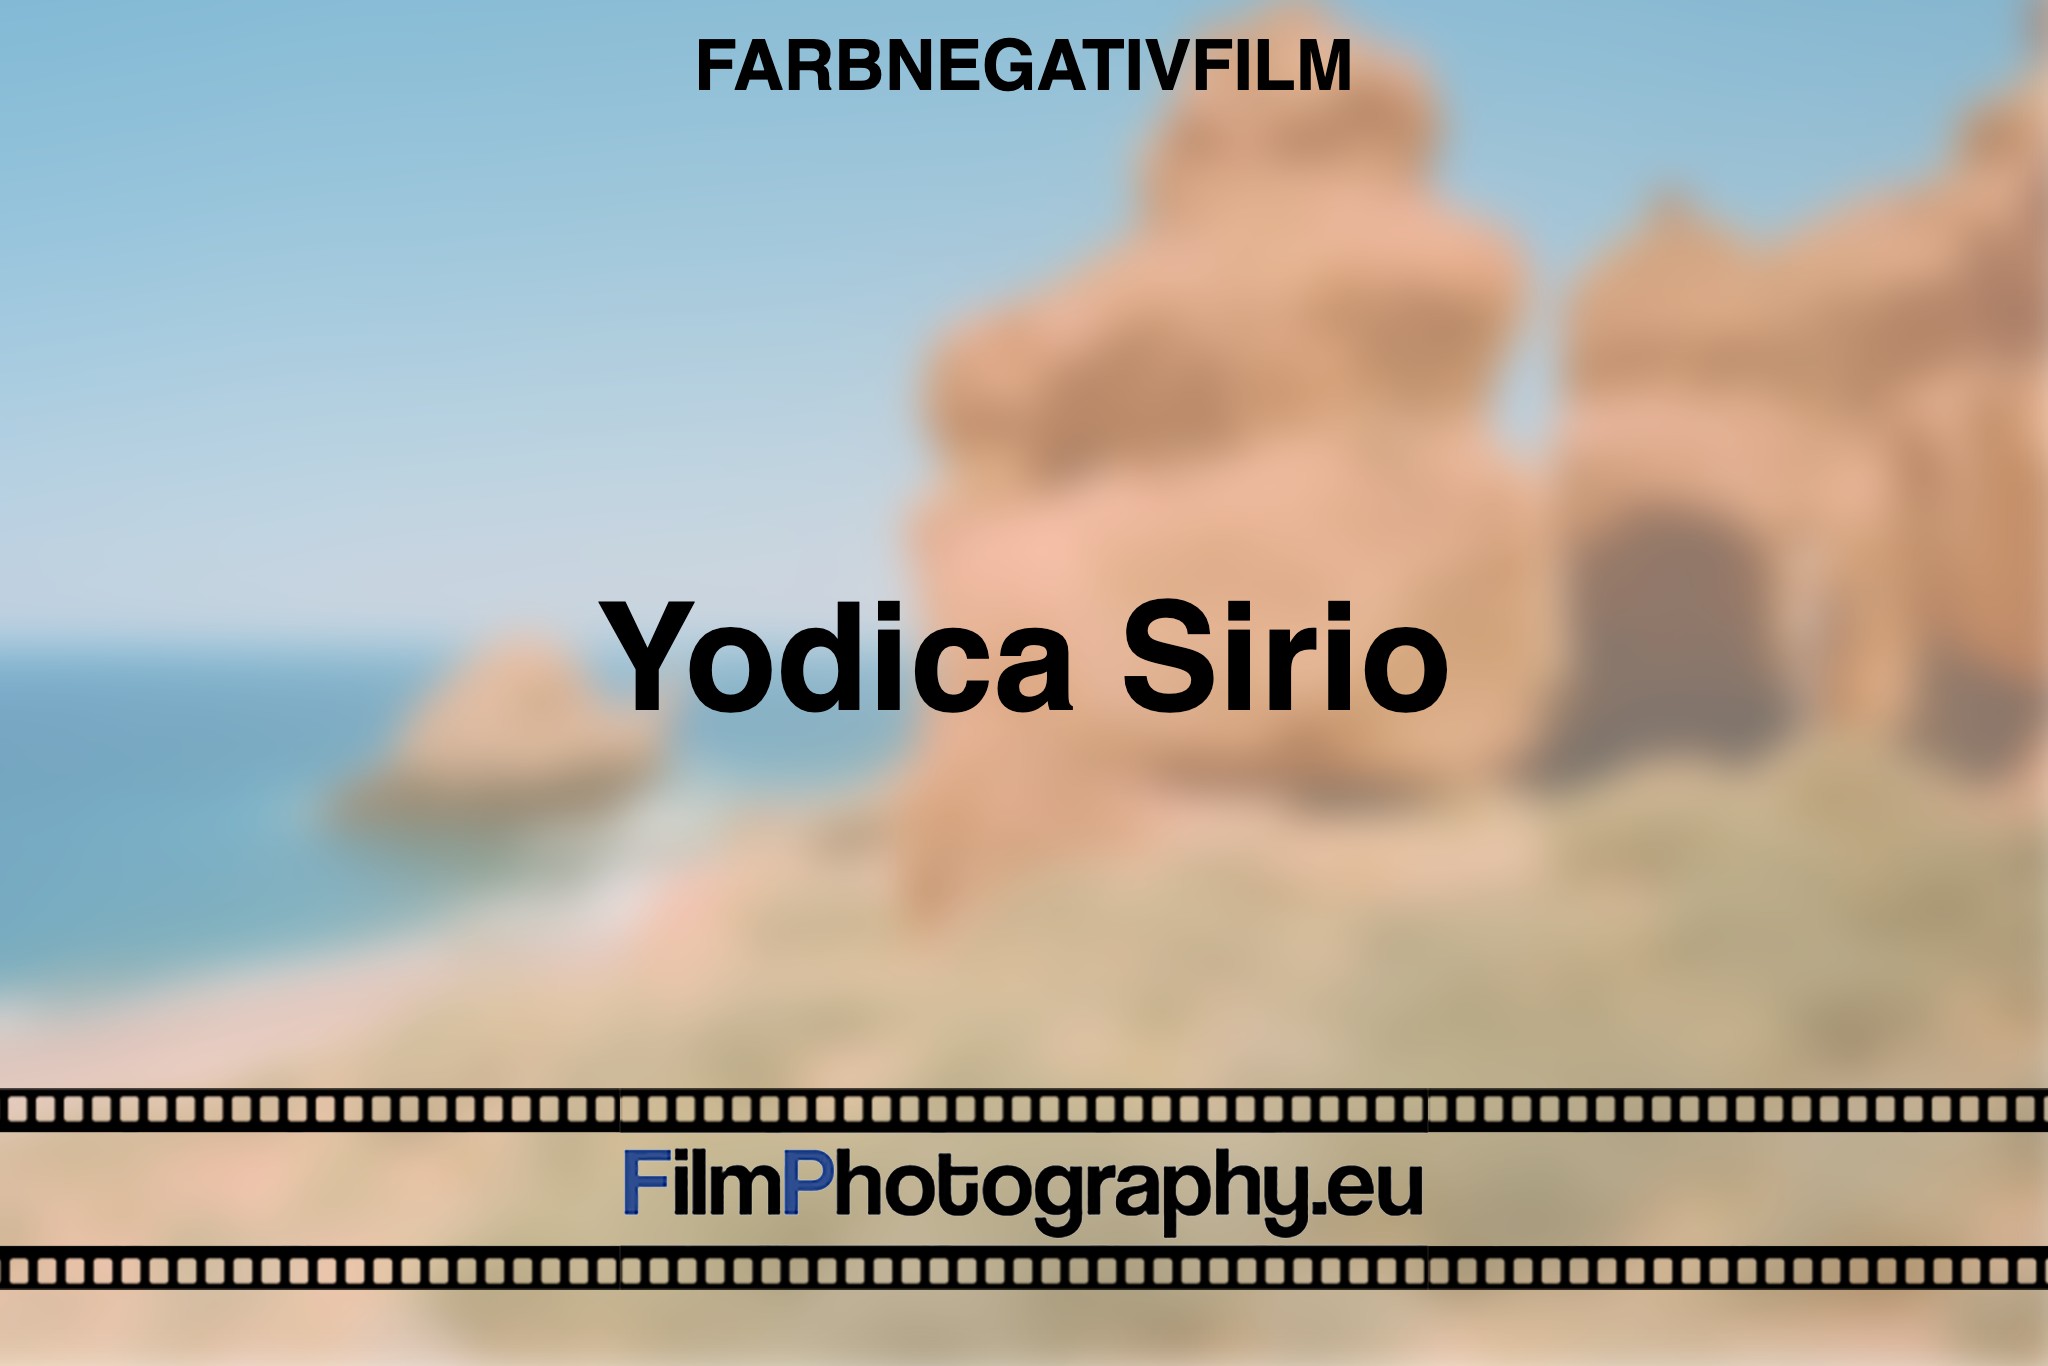 yodica-sirio-farbnegativfilm-bnv